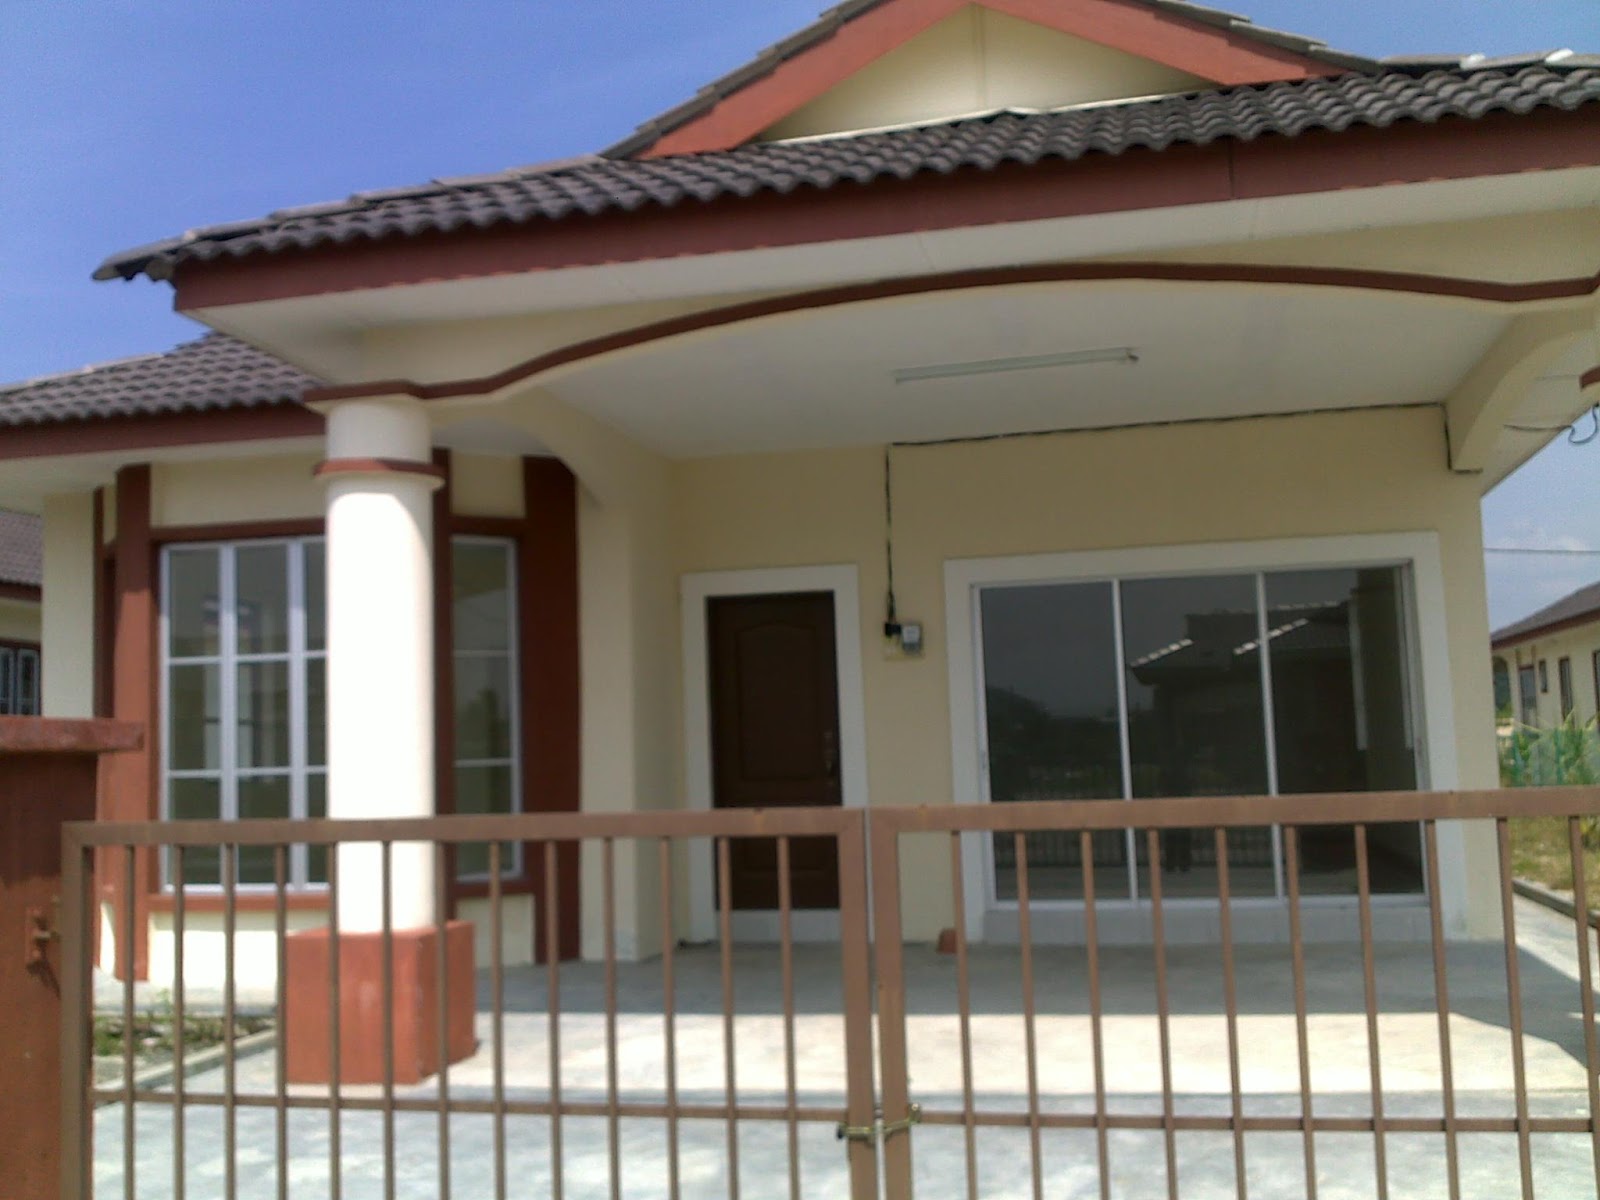 Rumah Idaman Di Malaysia #10 - Rumah Zee